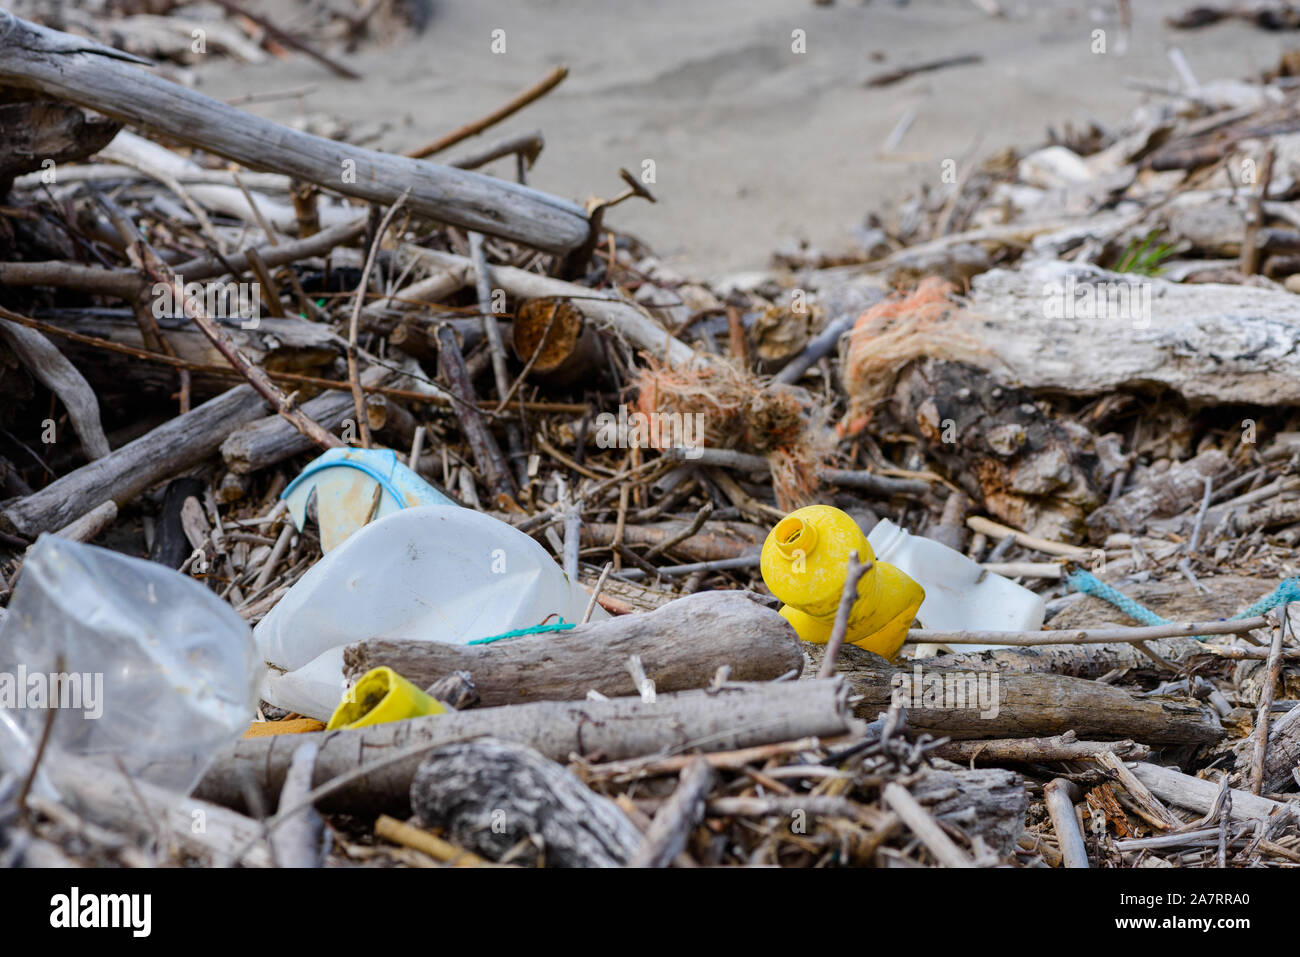 Plastic pollution in drift wood debris on ocean shore Stock Photo